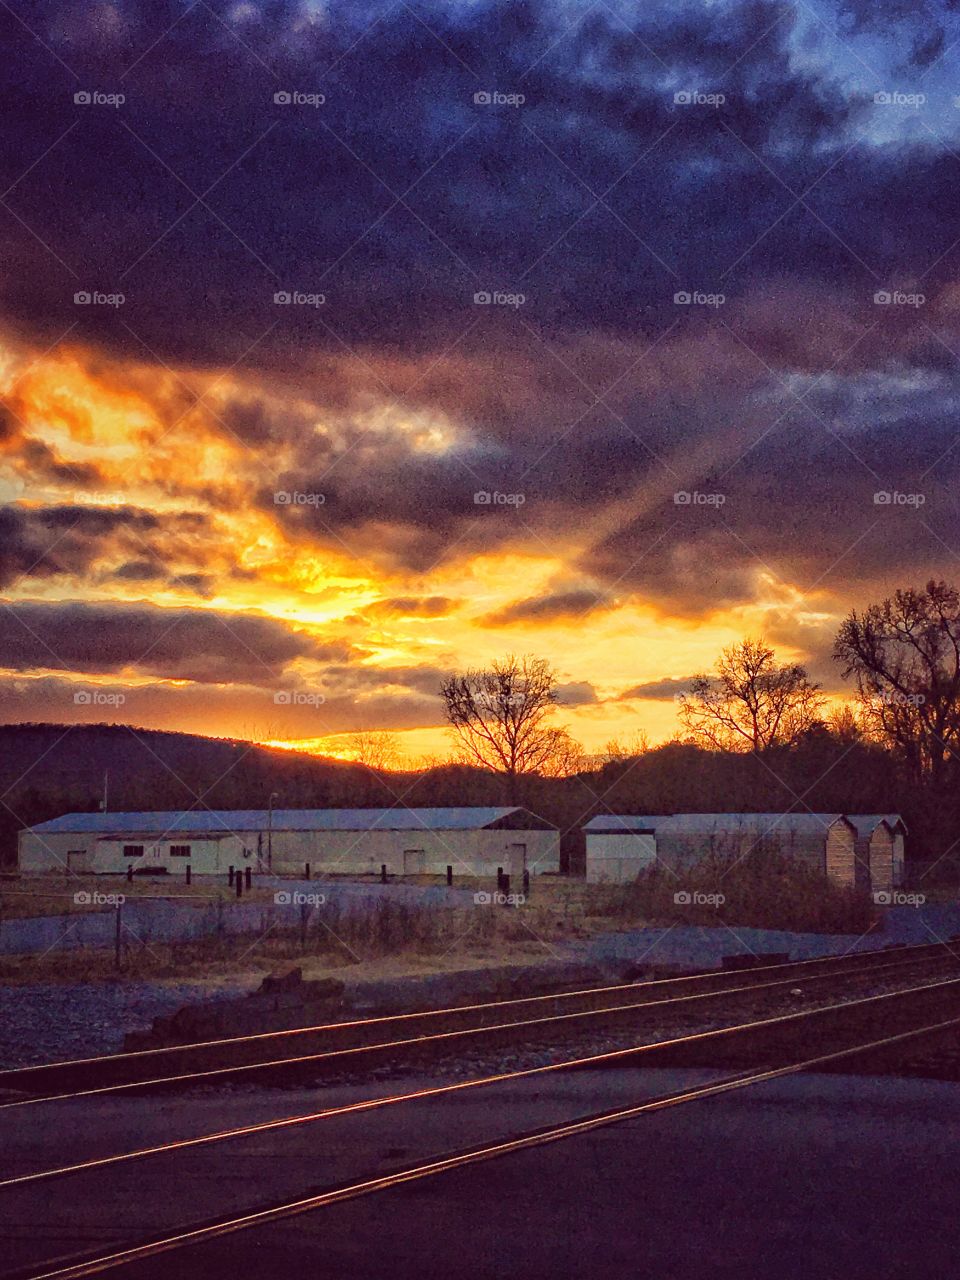 Sunset on the Tracks